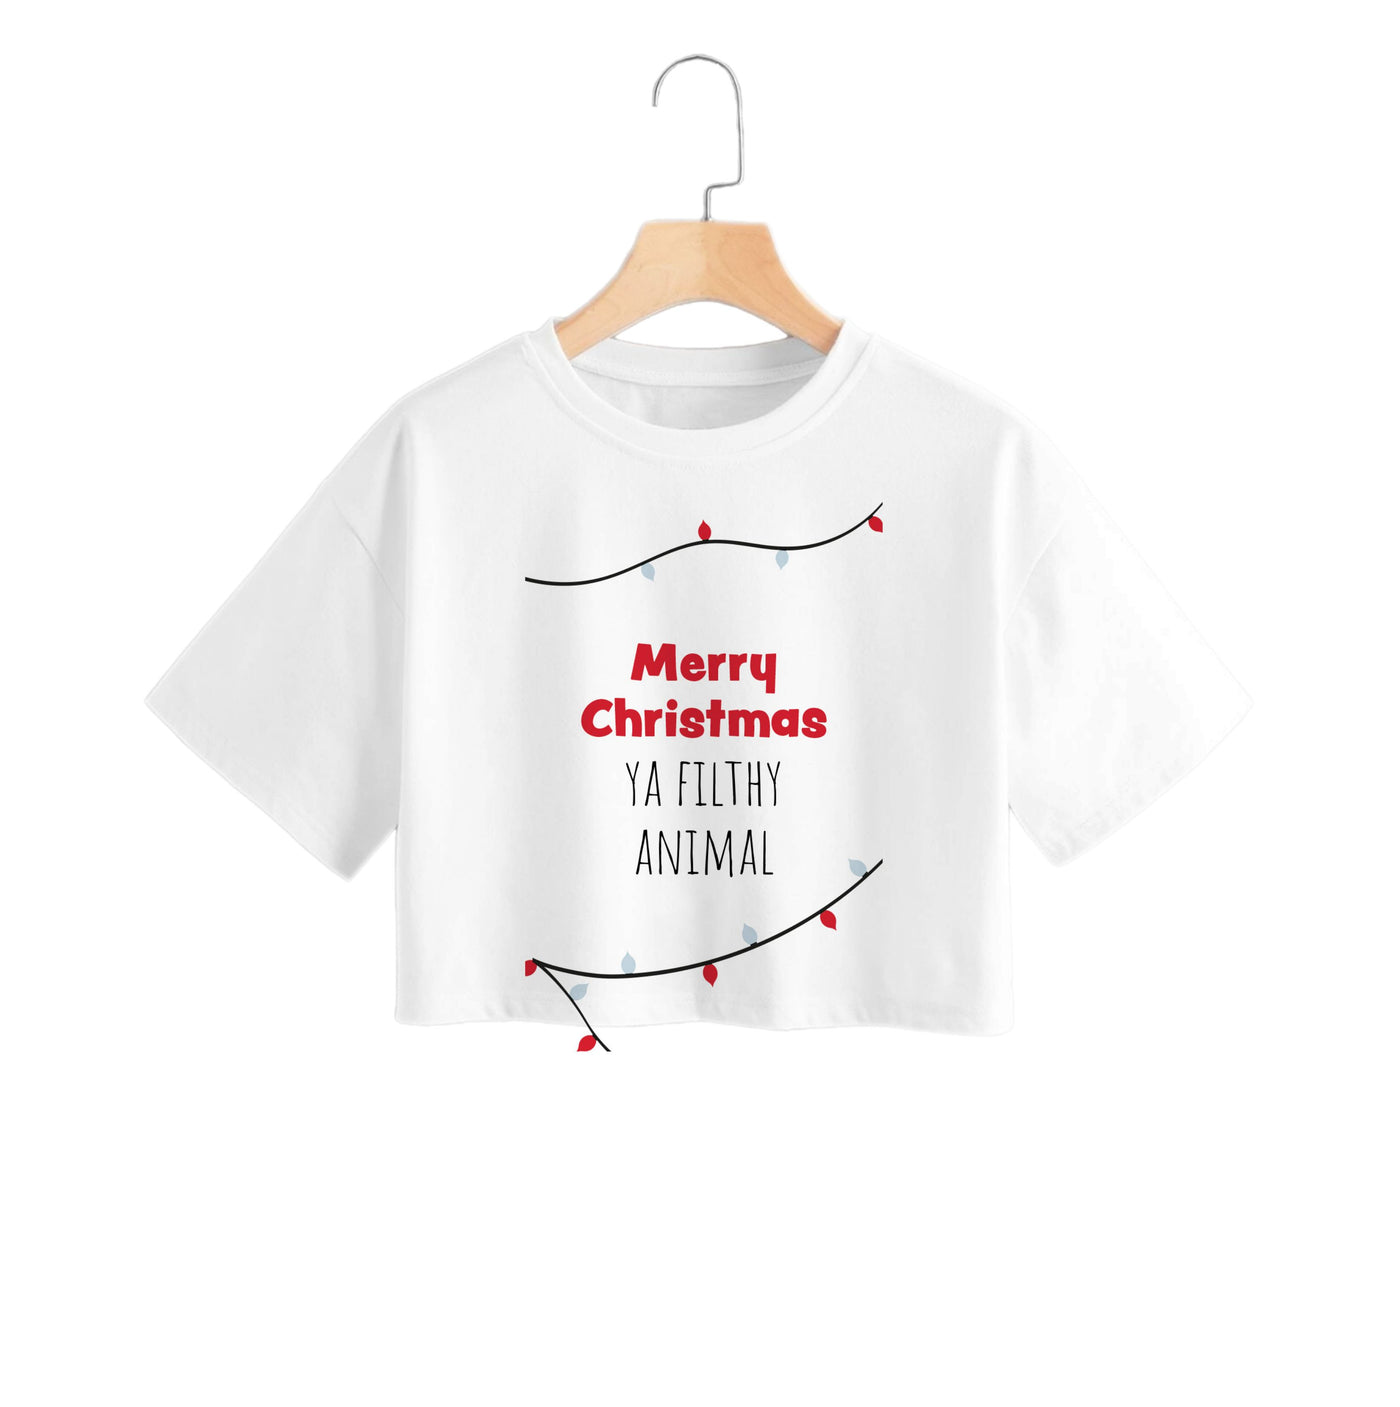 Merry Christmas Ya Filthy Animal - Home Alone Crop Top